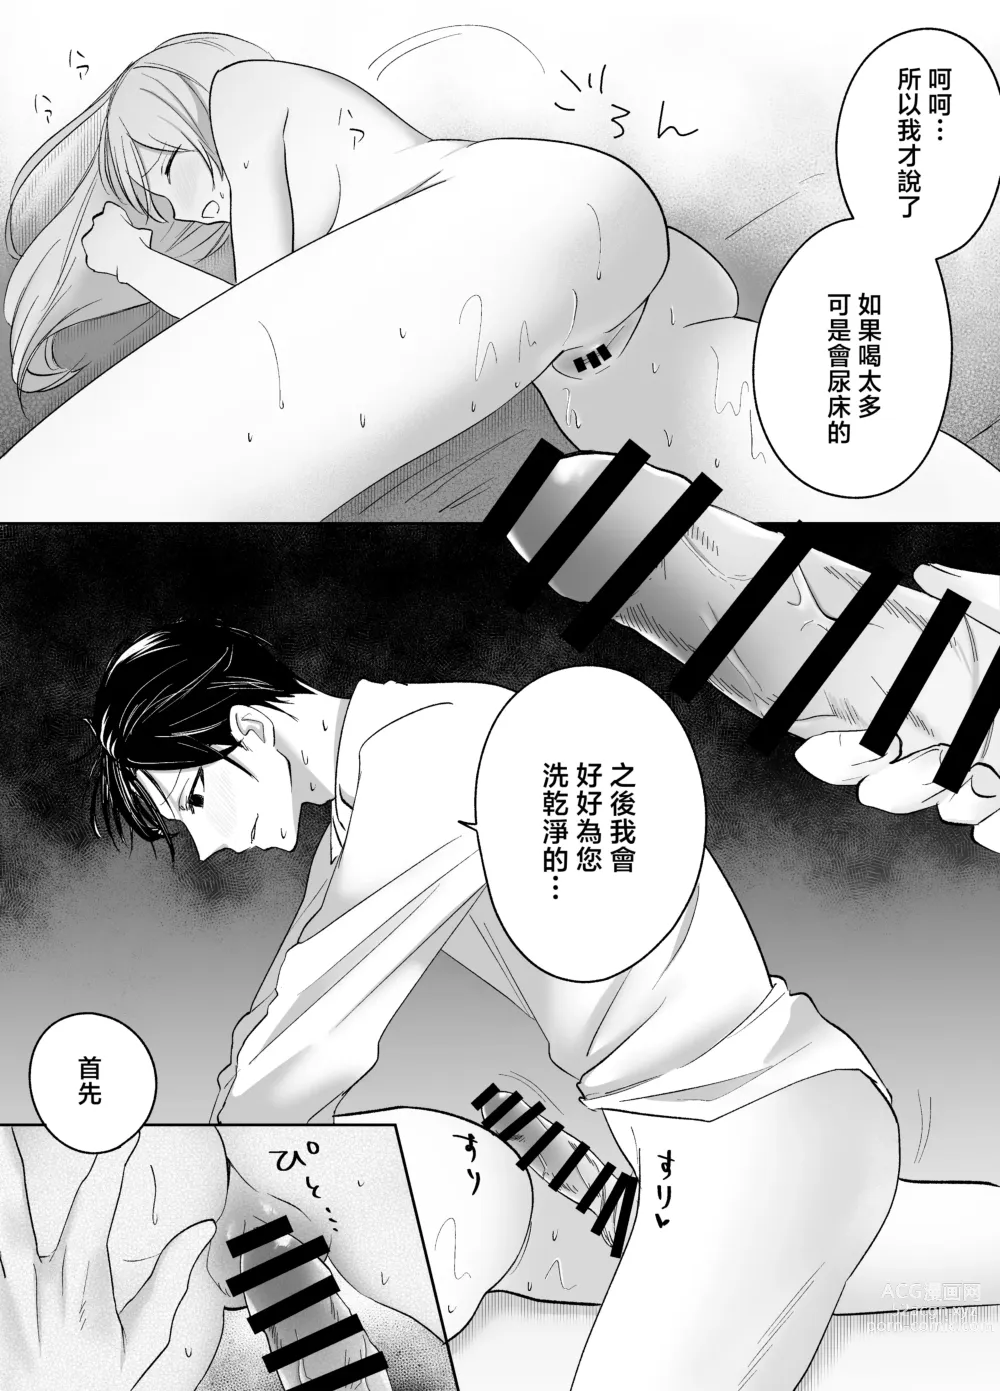 Page 12 of doujinshi 大小姐，抱歉打扰您就寝